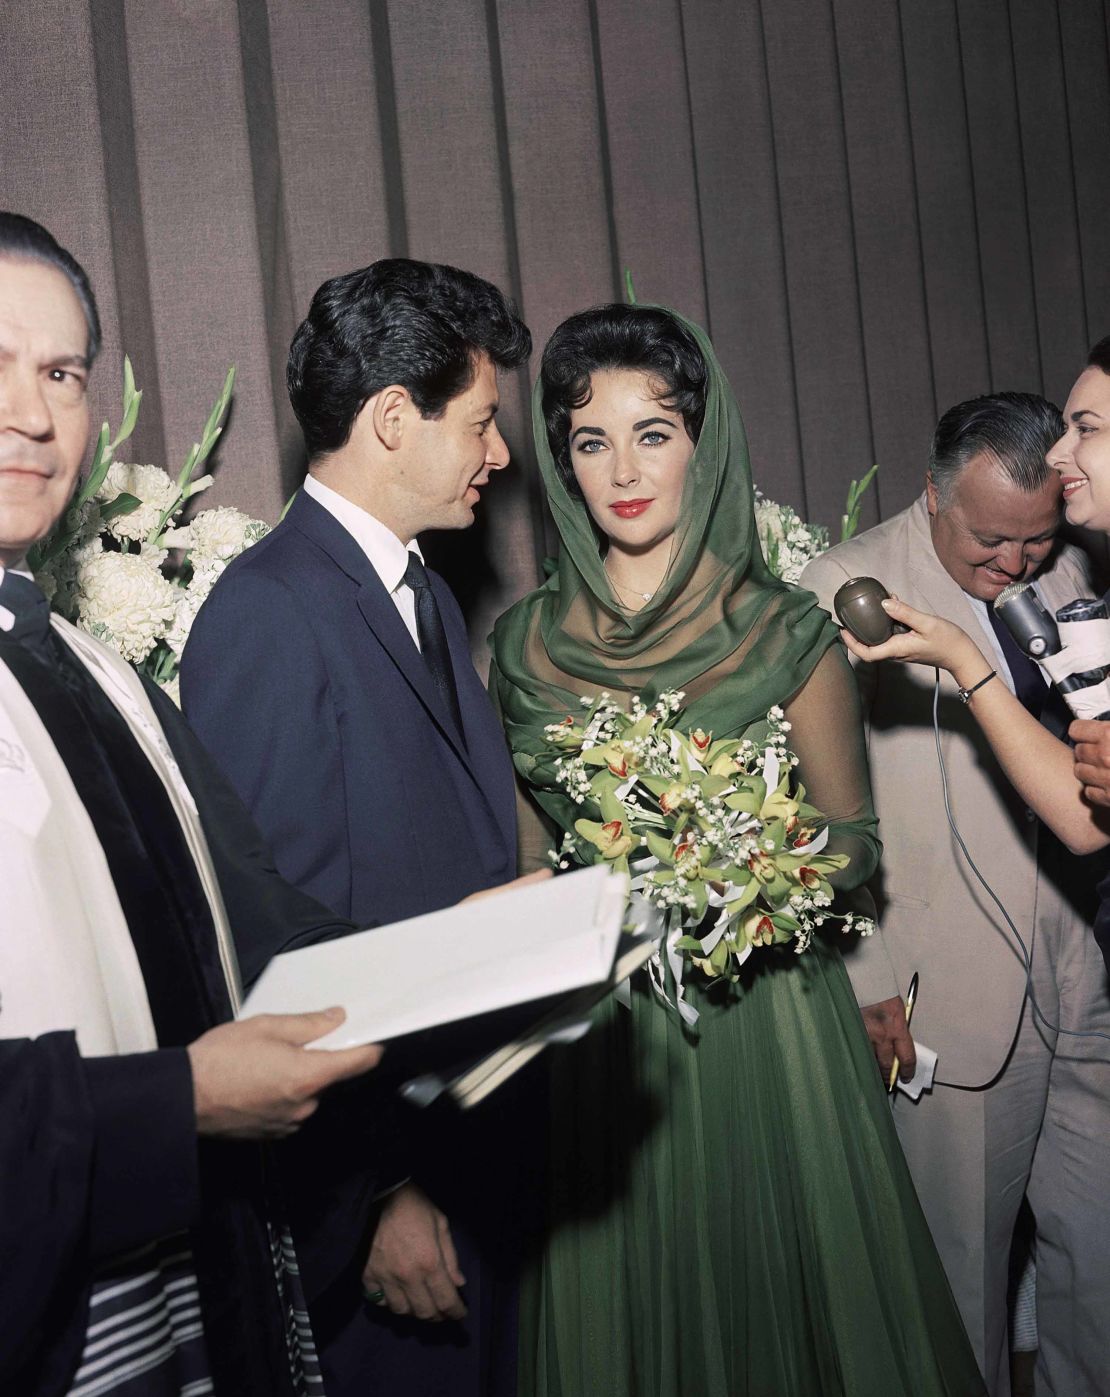 Elizabeth Taylor wore a green wedding dress for her wedding to singer Eddie Fisher. 